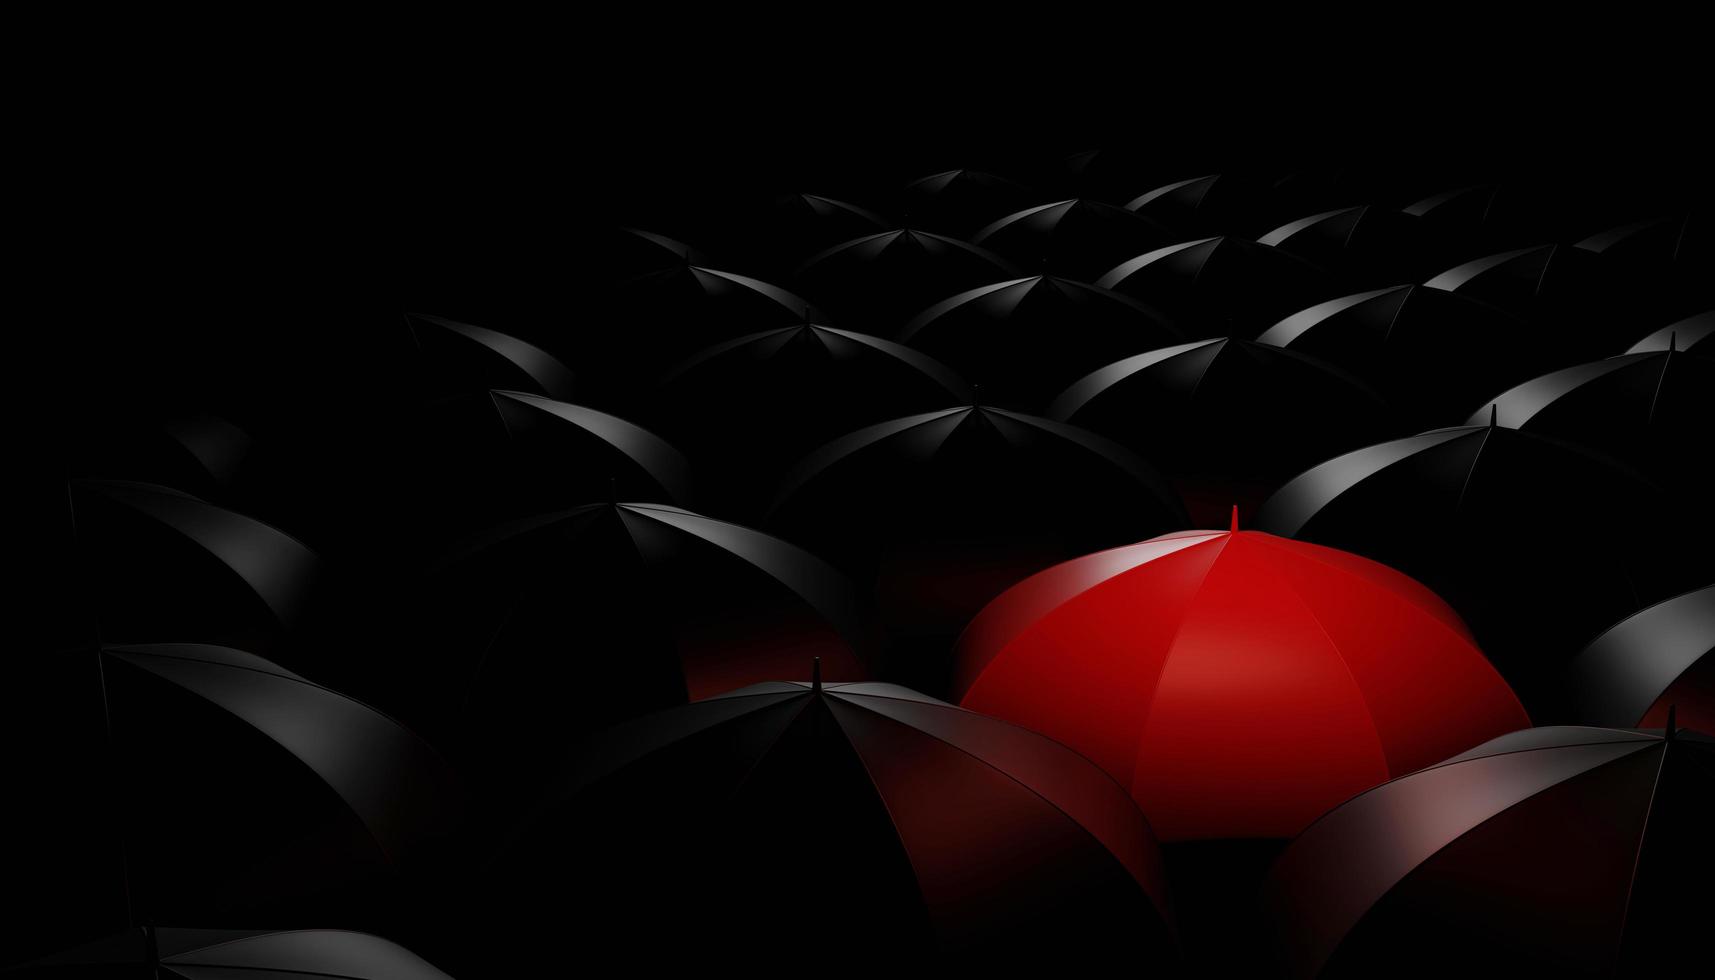 3d concept abstract different business red umbrella among black umbrella dark background. 3d illustration render photo